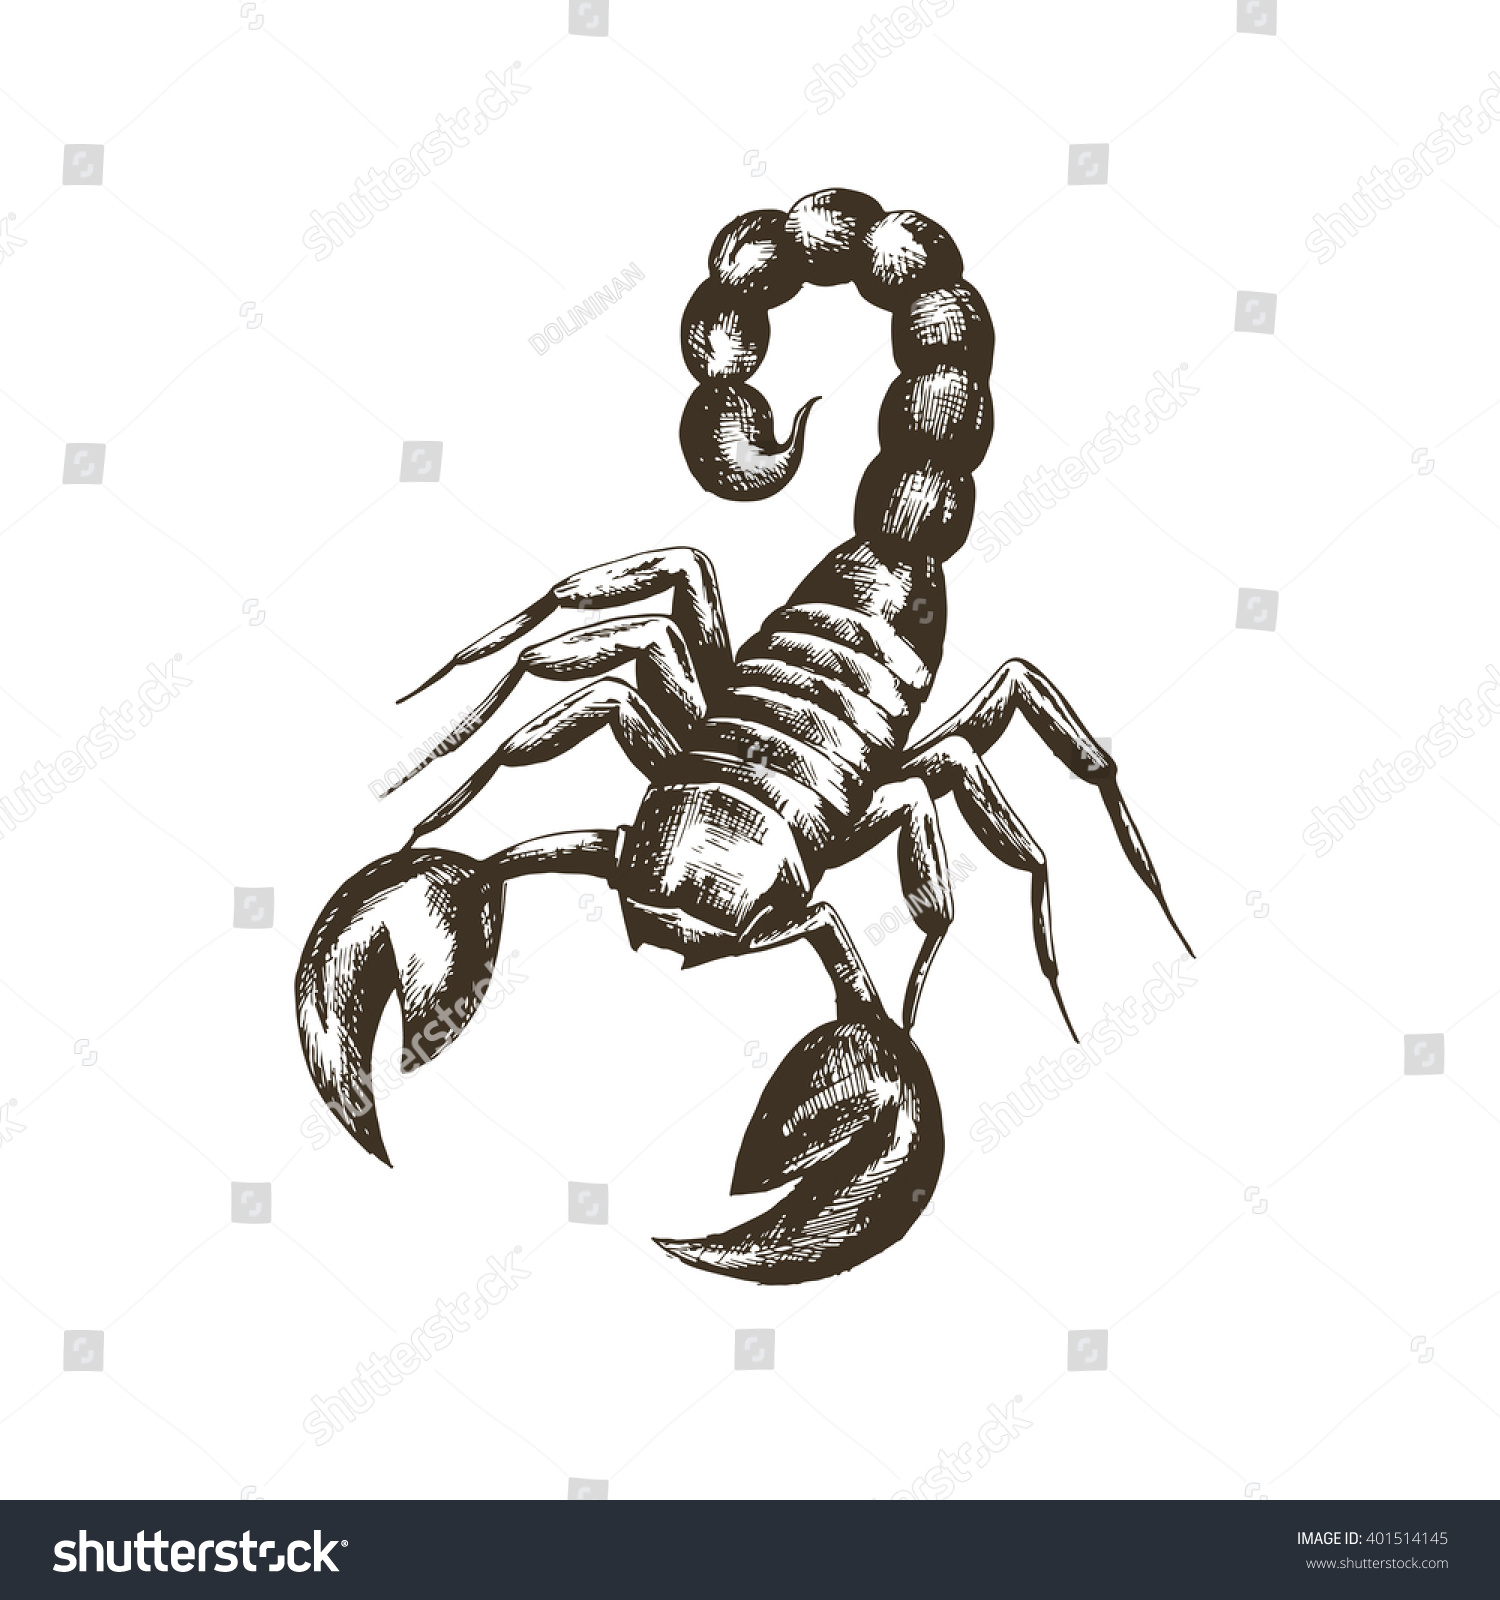 Скорпион на нарды рисунок